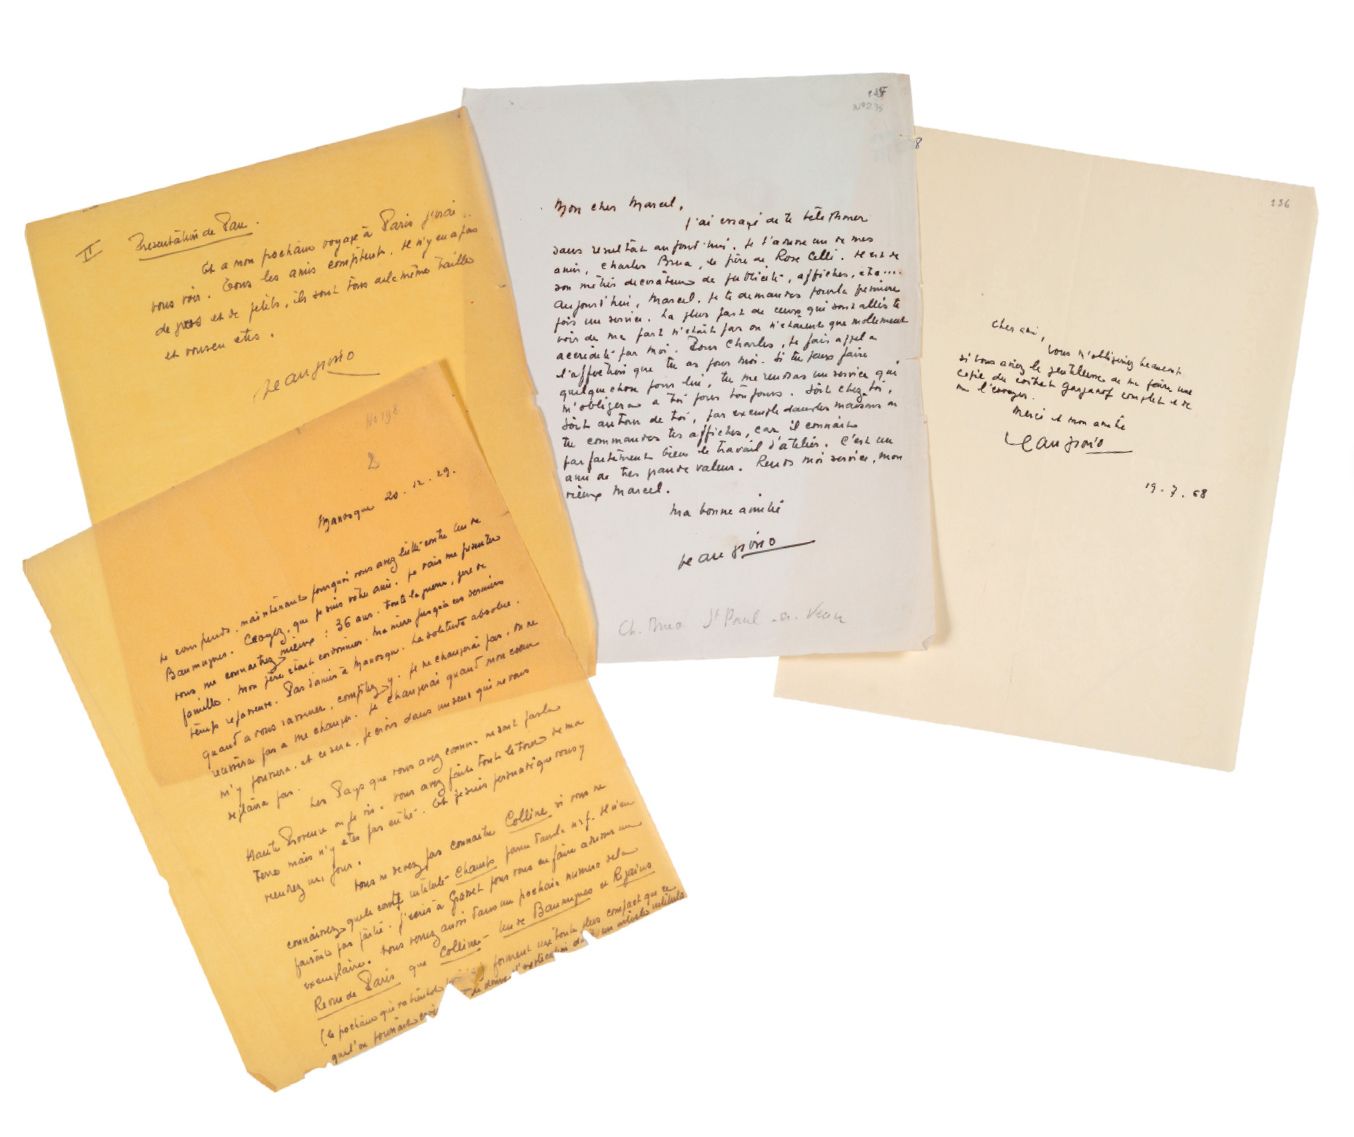 GIONO Jean (1895-1970) Tres cartas autógrafas firmadas a Eugène DABIT.
- Carta a&hellip;